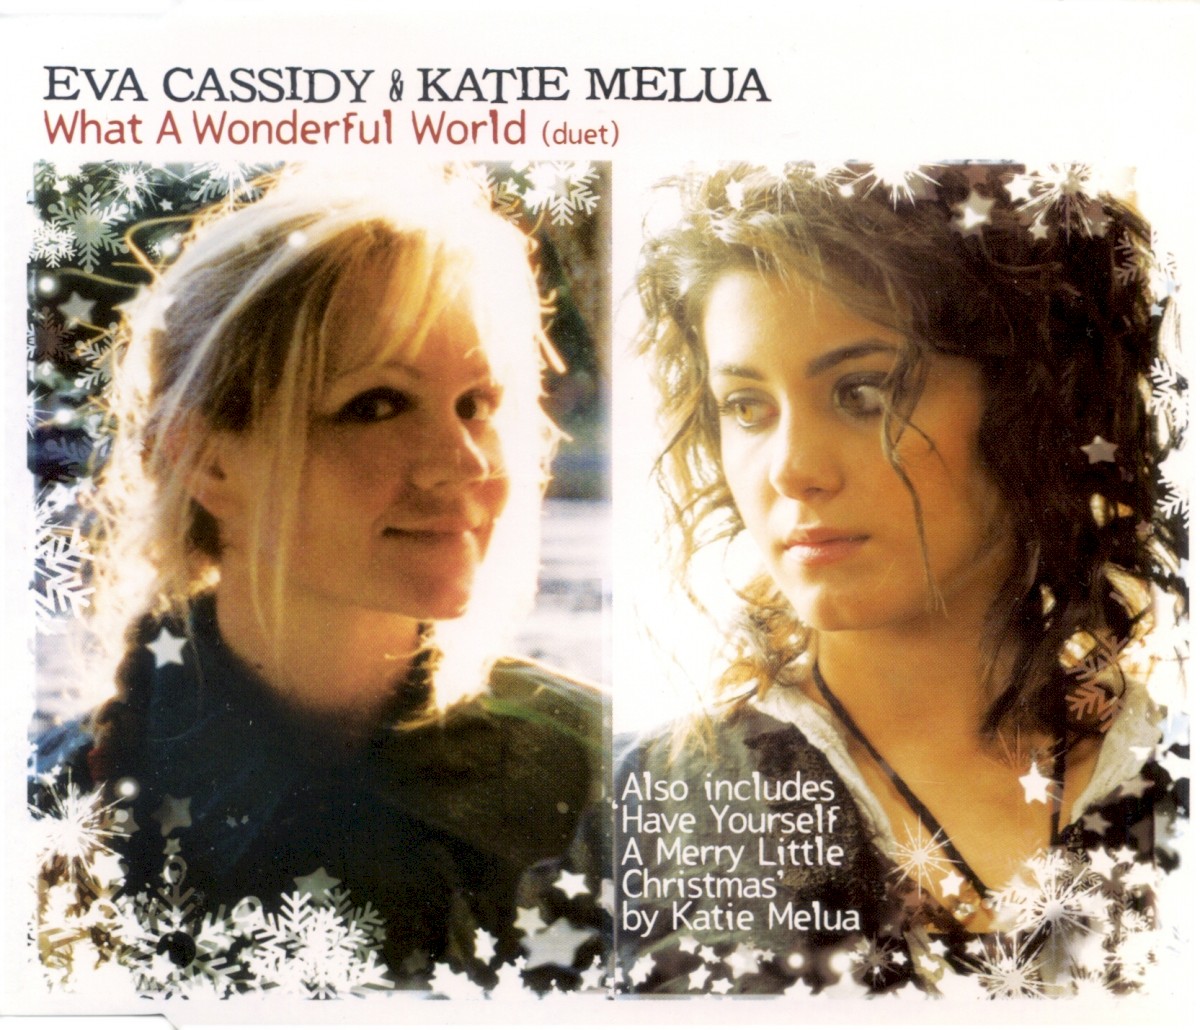 Eva Cassidy & Katie Melua What a Wonderful World cover artwork